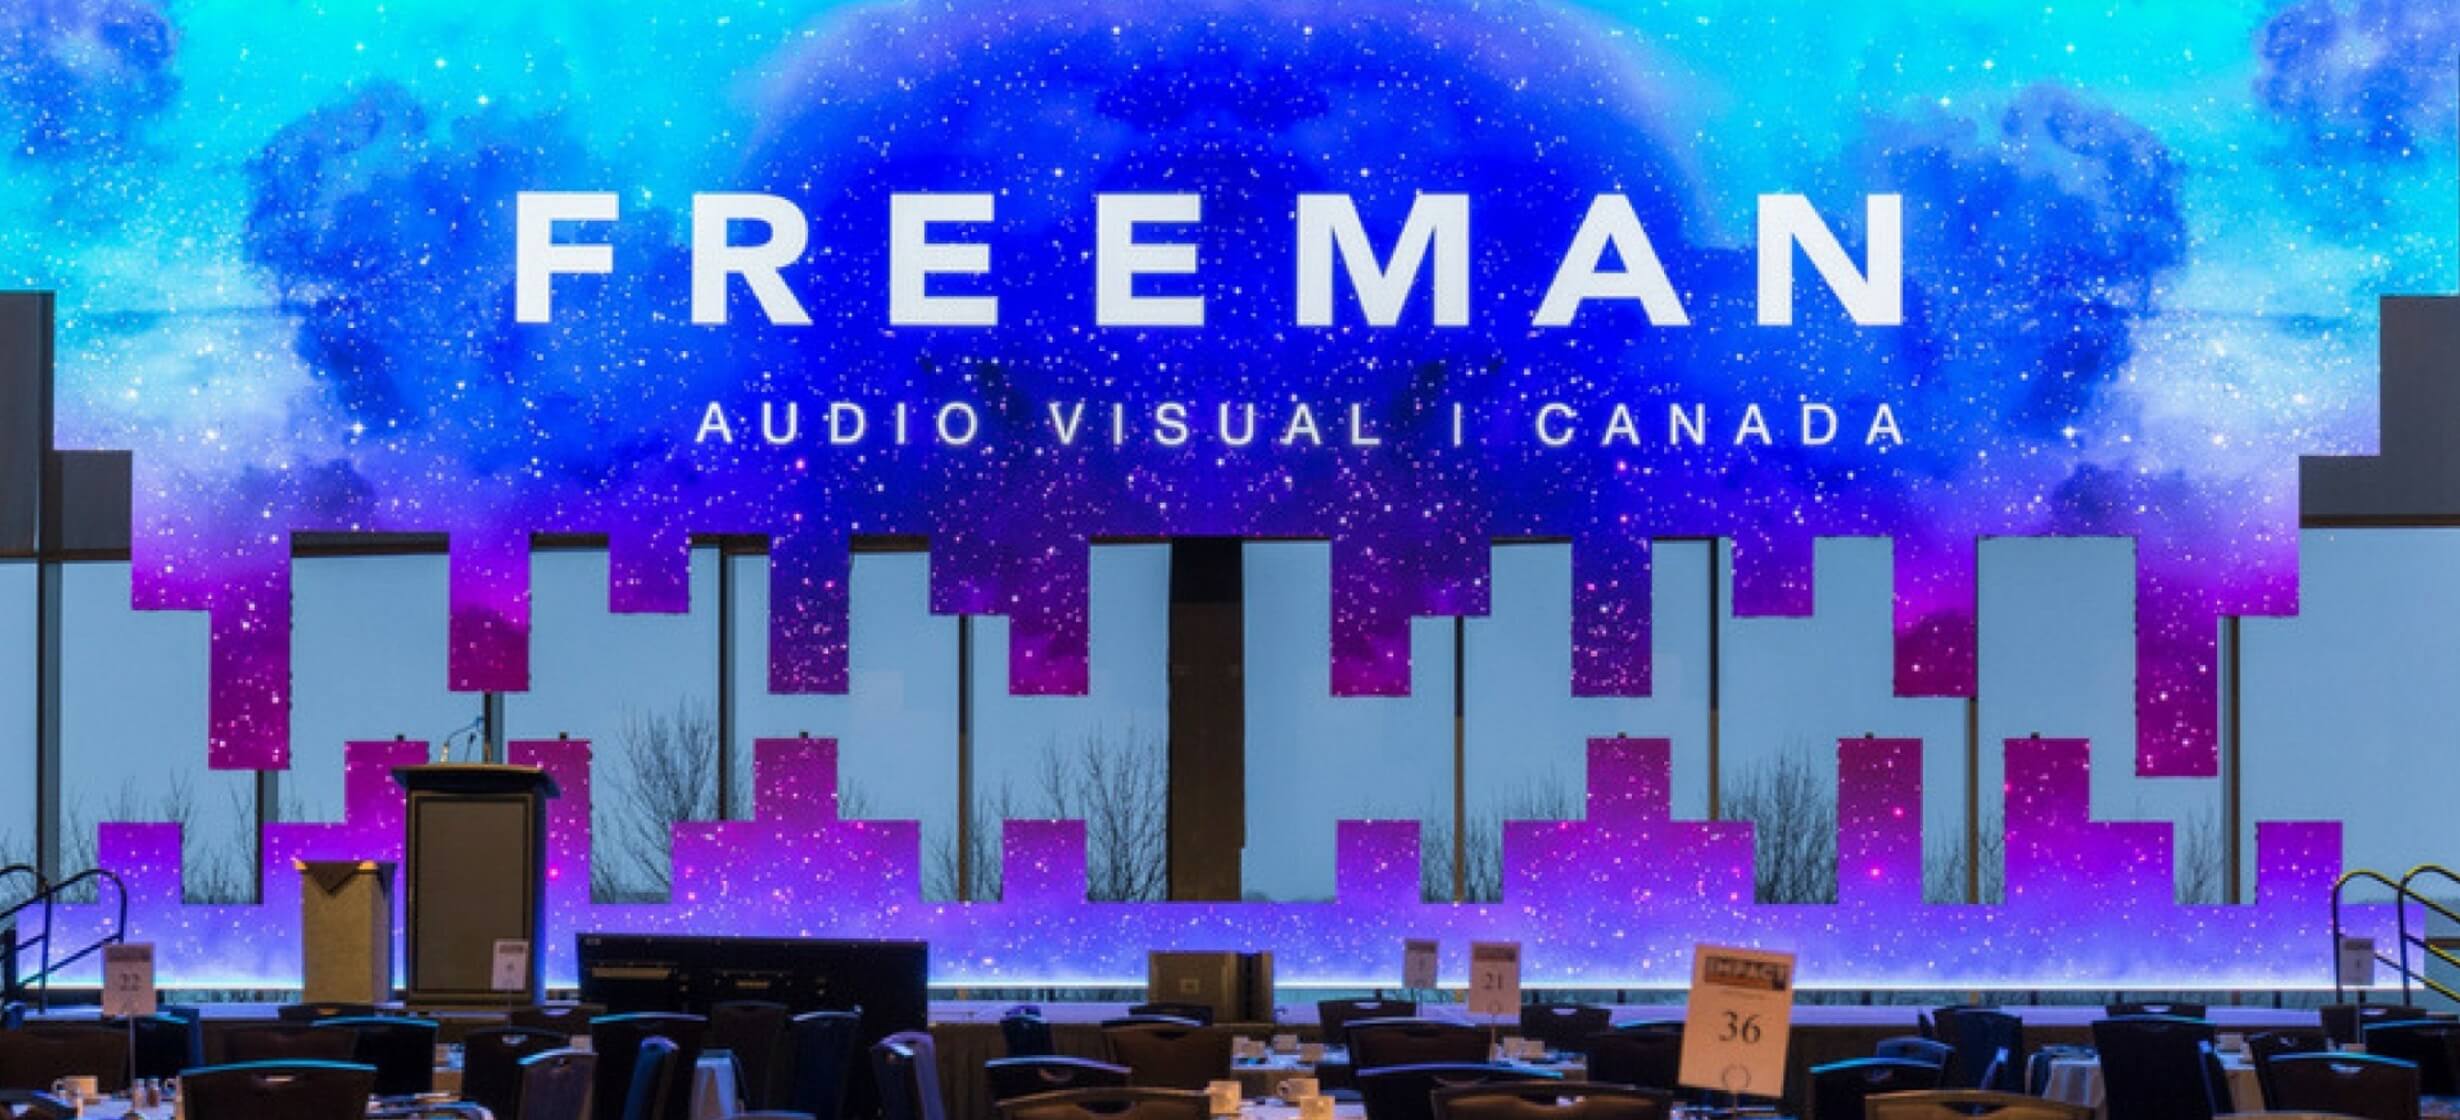 Freeman Audio Visual